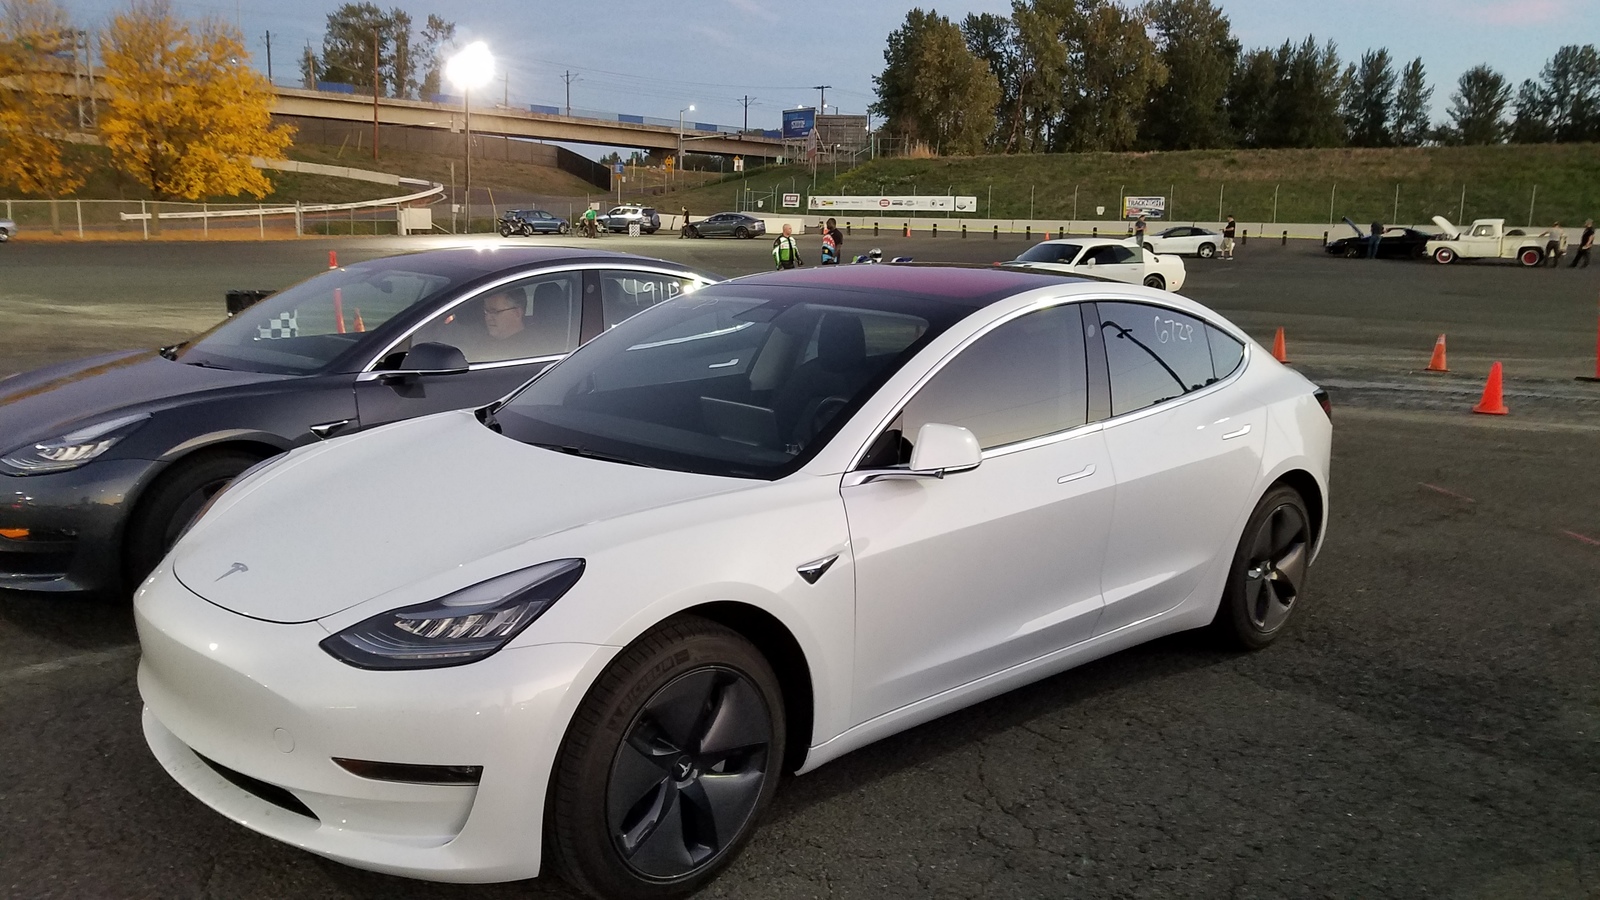 Stock 2018 Tesla Model 3 RWD Long Range 1/4 mile trap speeds 0-60 - DragTimes.com1600 x 900